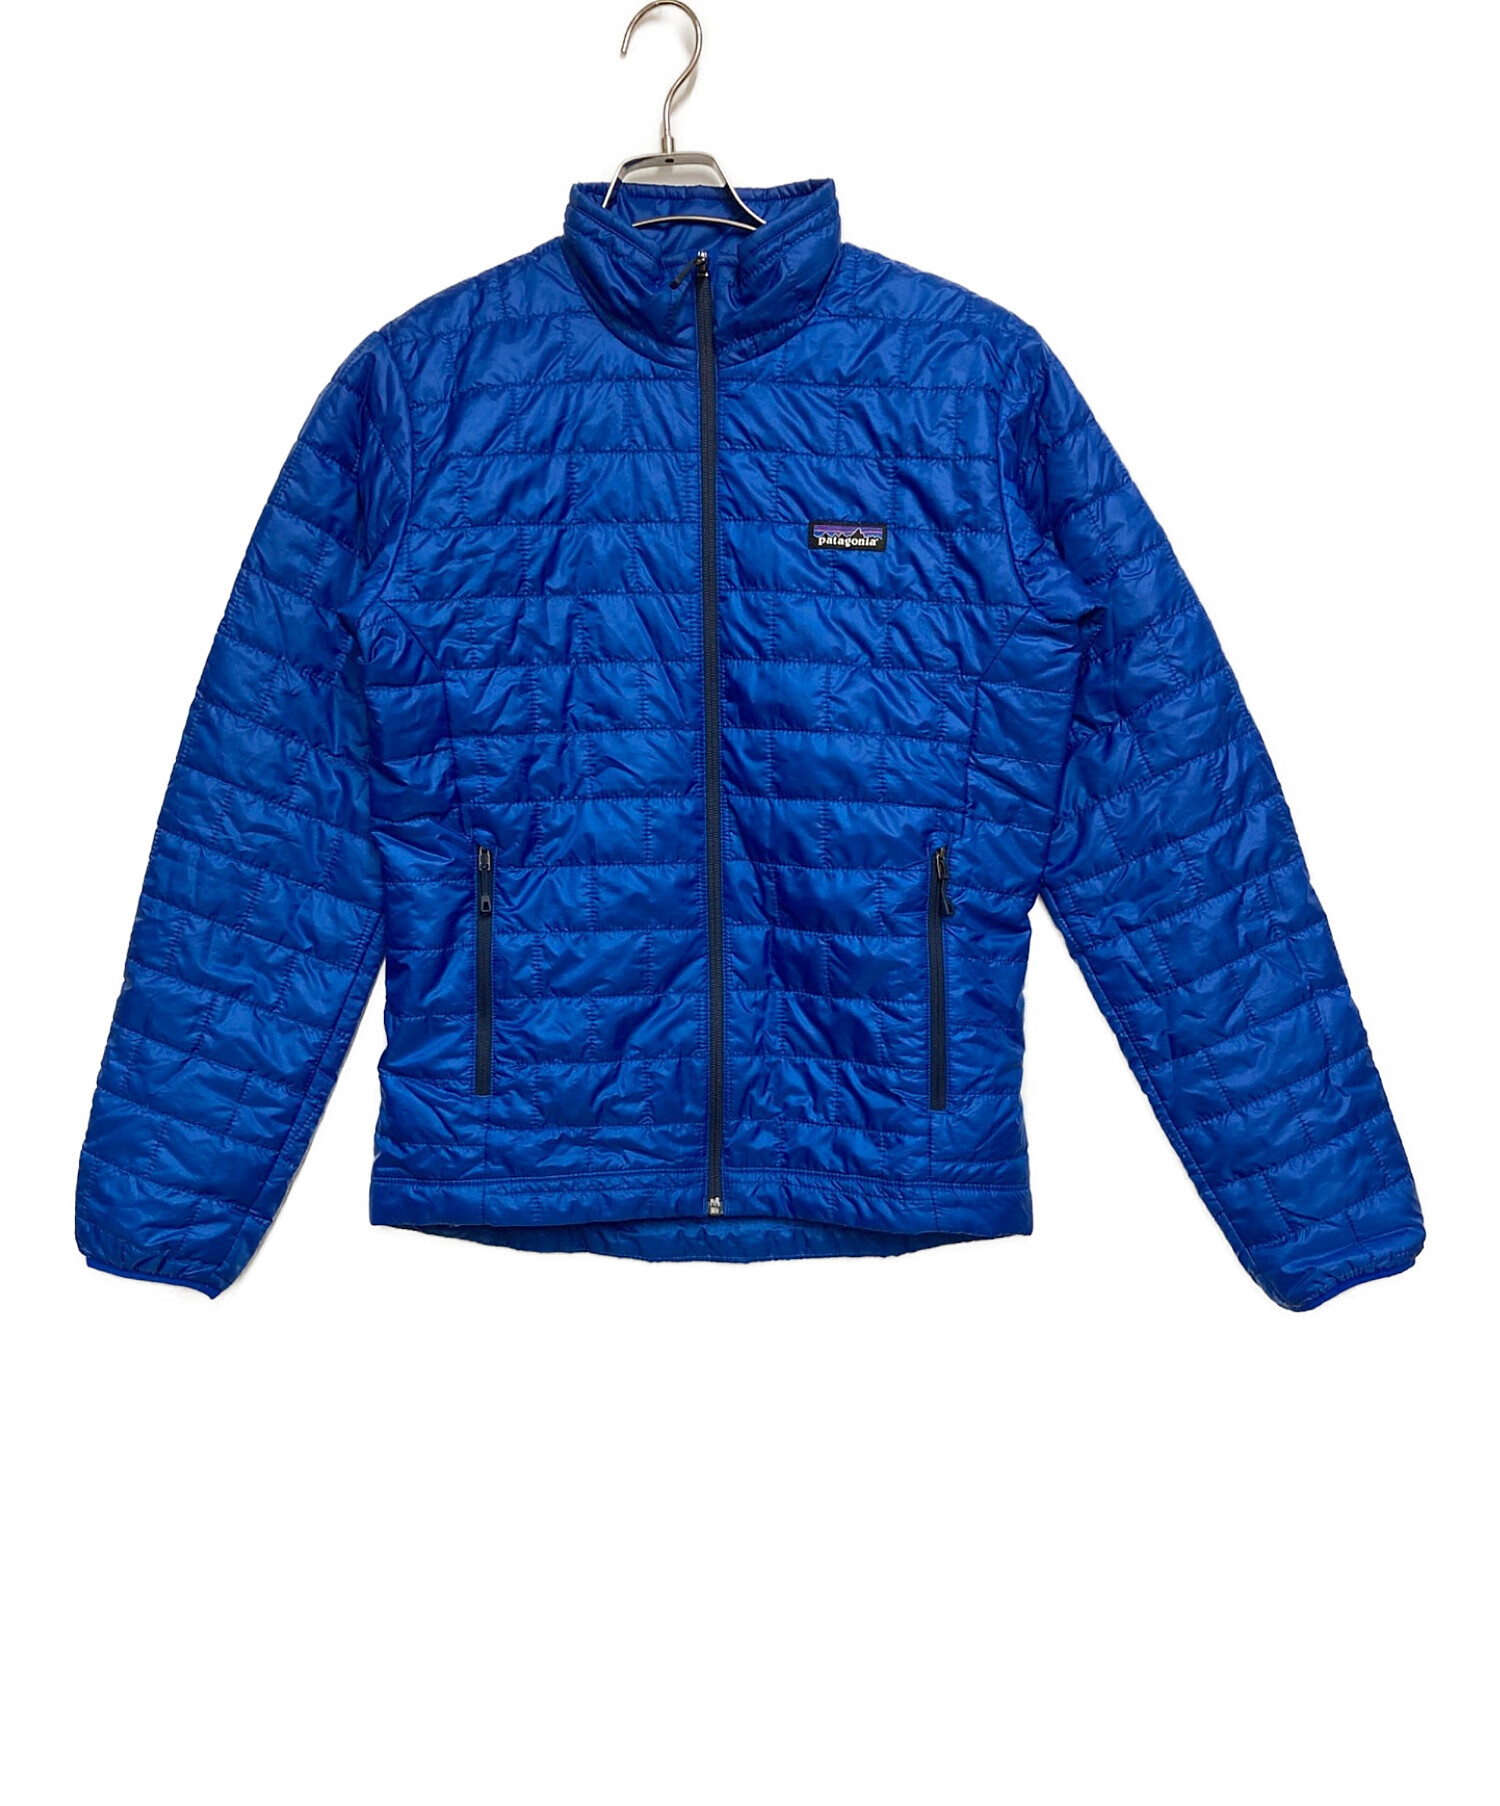 Patagonia (パタゴニア) ナノパフジャケット ブルー サイズ:XSサイズ